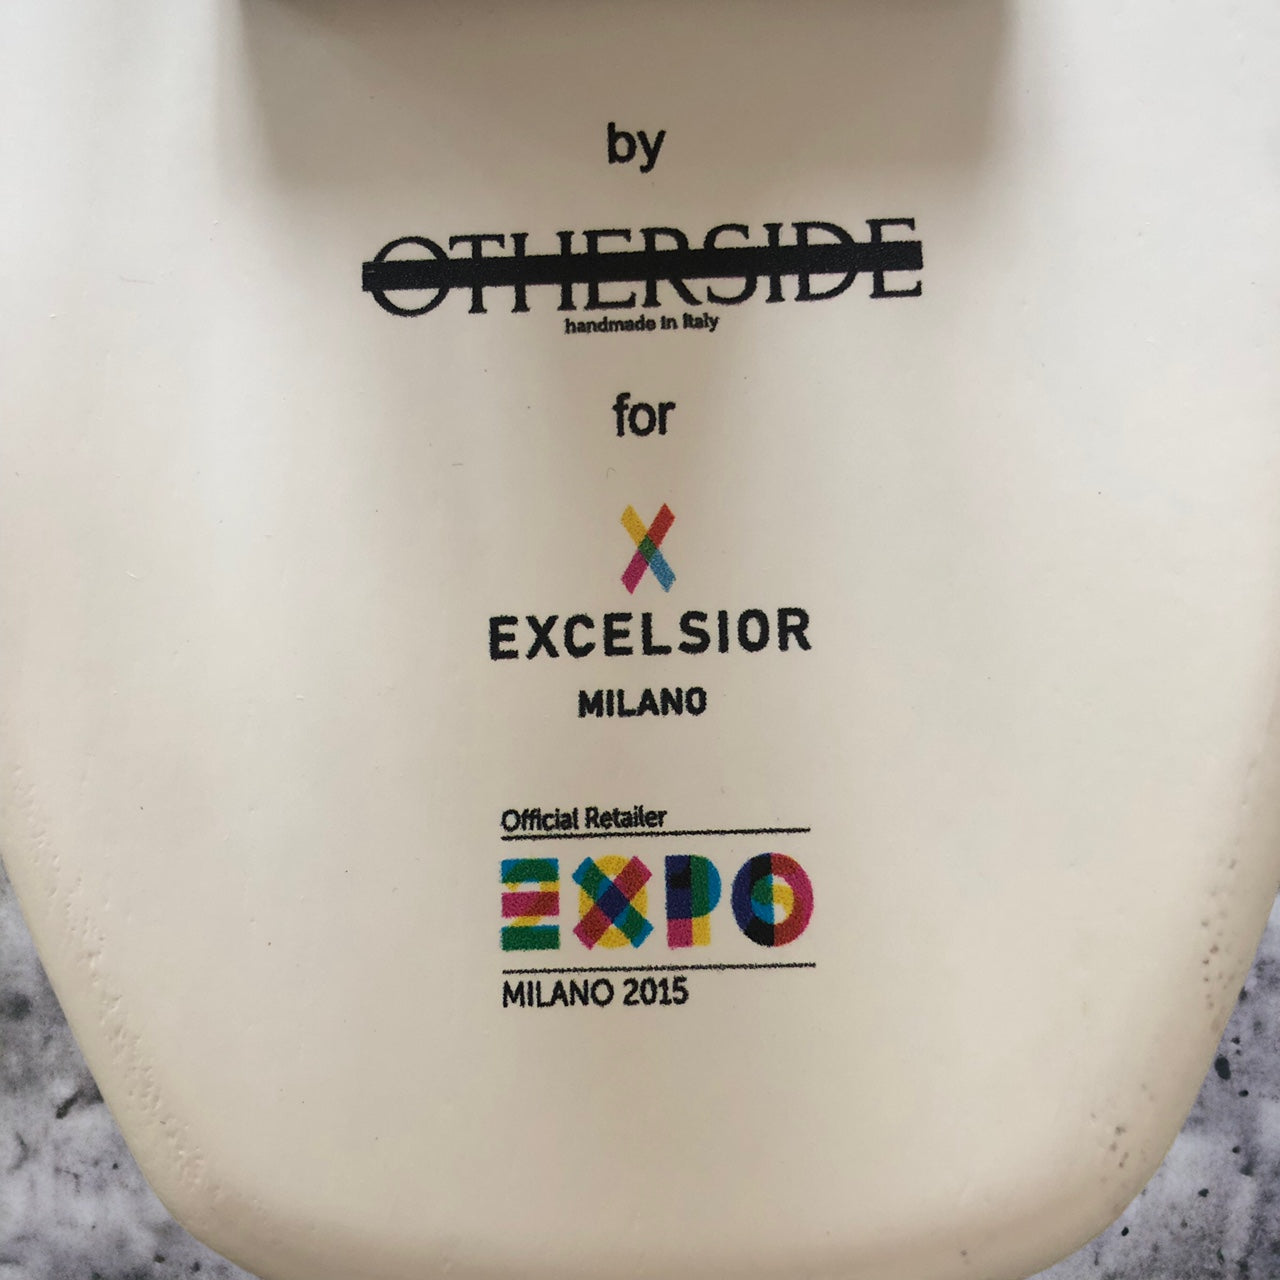 The Otherside Skateboard x Excelsior Milano